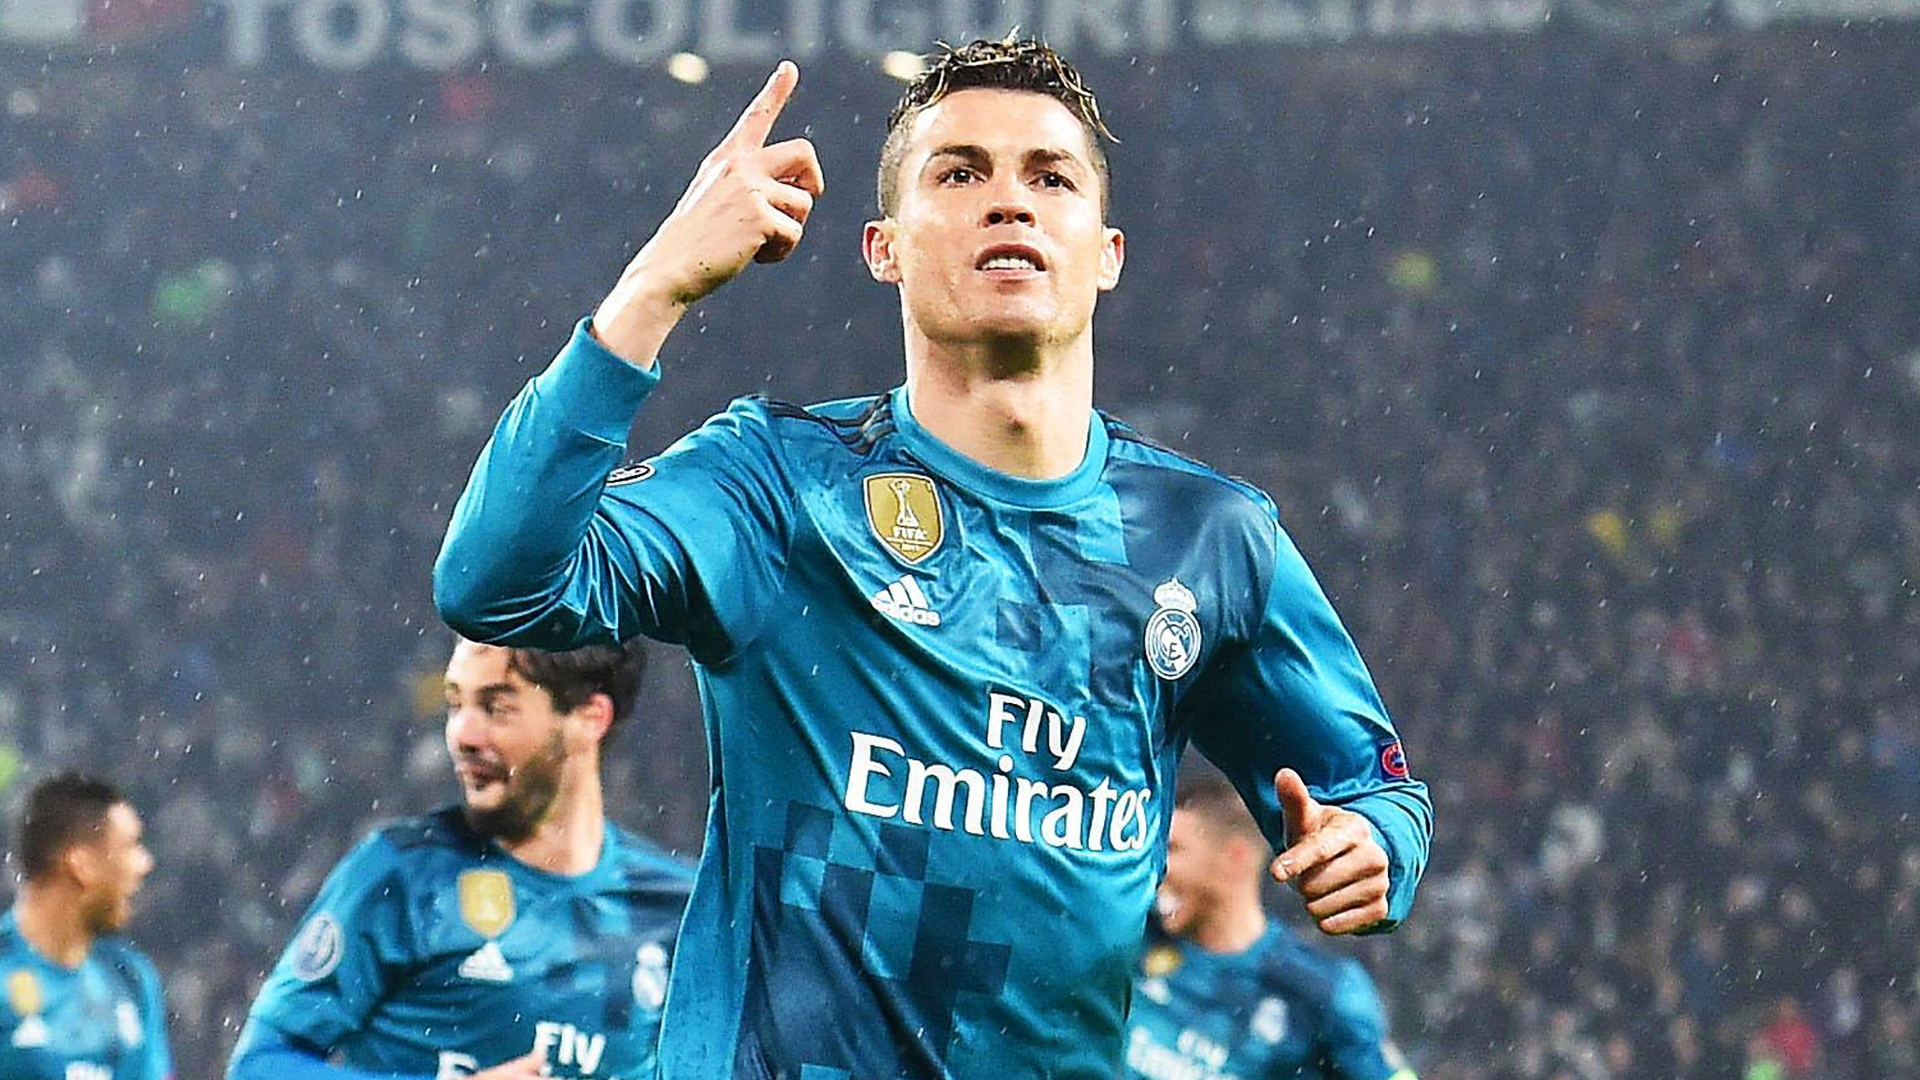 Ronaldo1.jpg